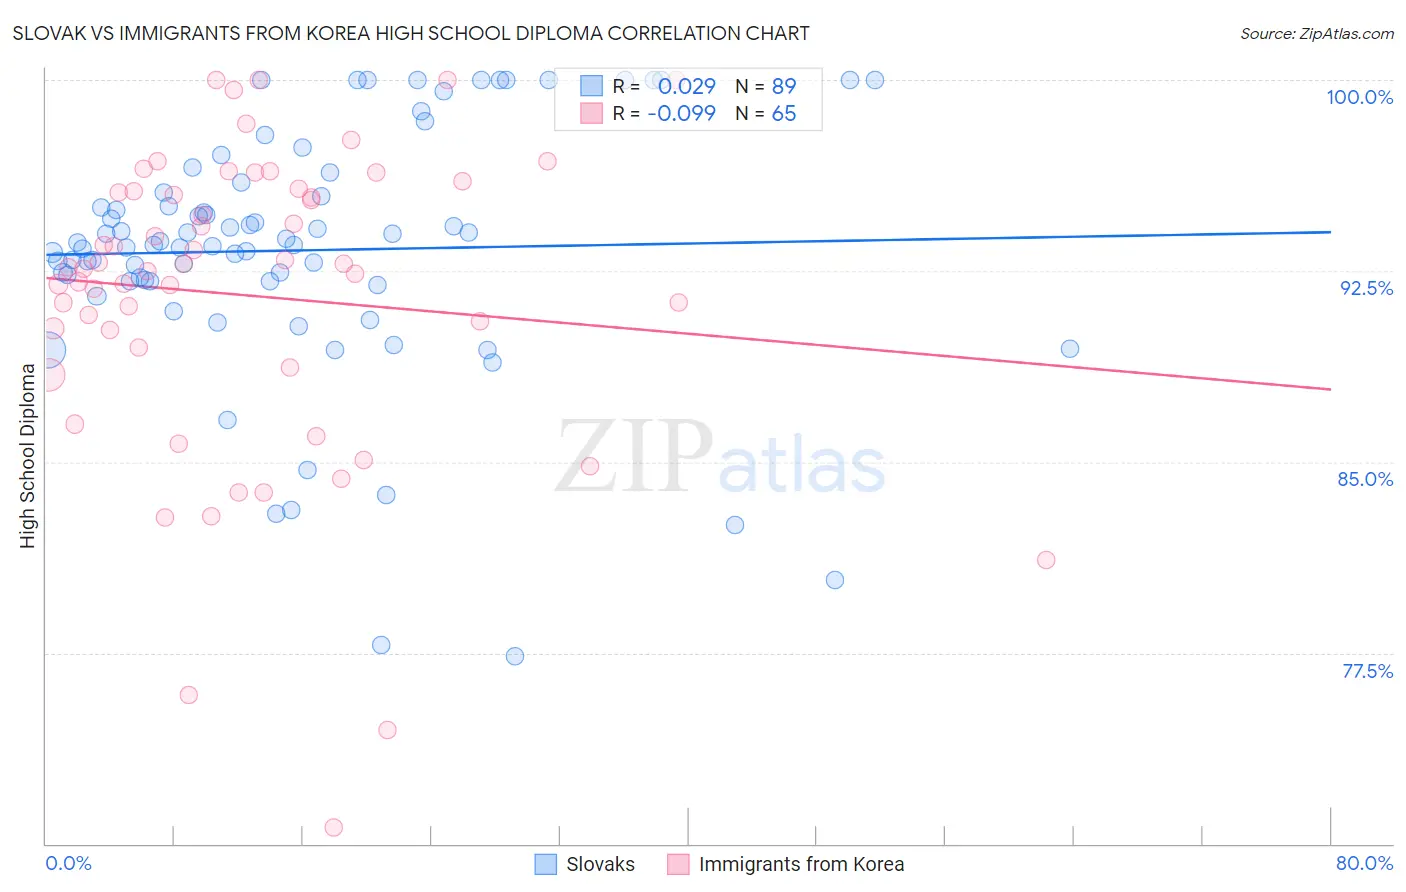 Slovak vs Immigrants from Korea High School Diploma